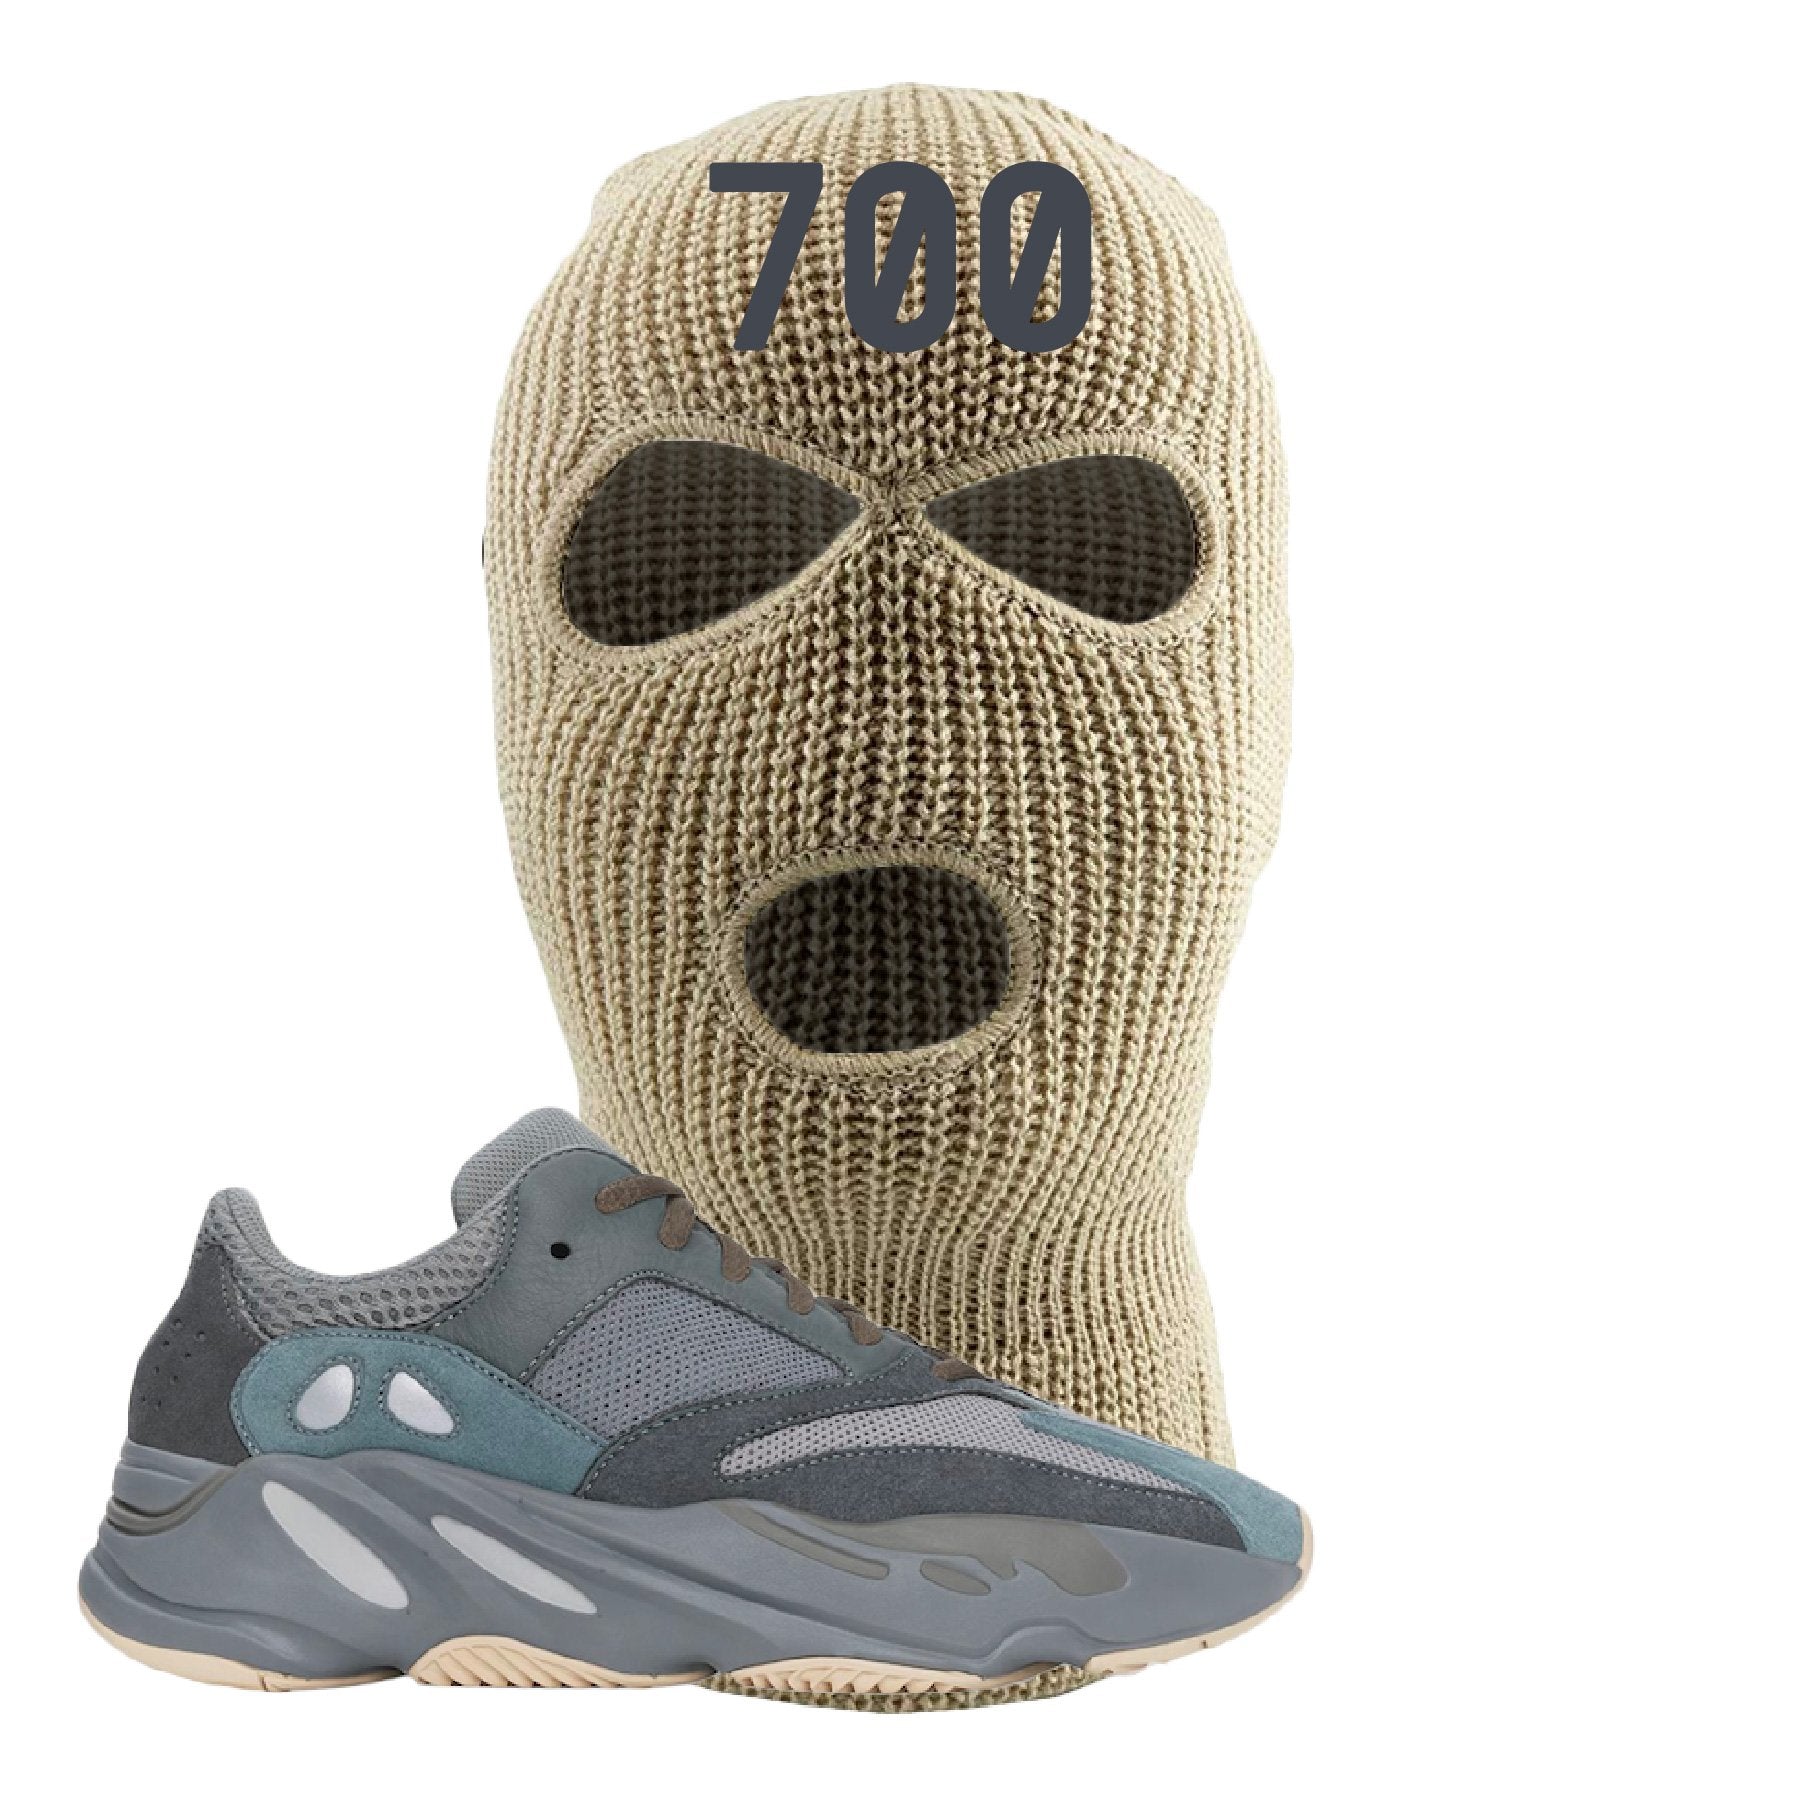 Yeezy Boost 700 Teal Blue 700 Khaki Sneaker Hook Up Ski Mask